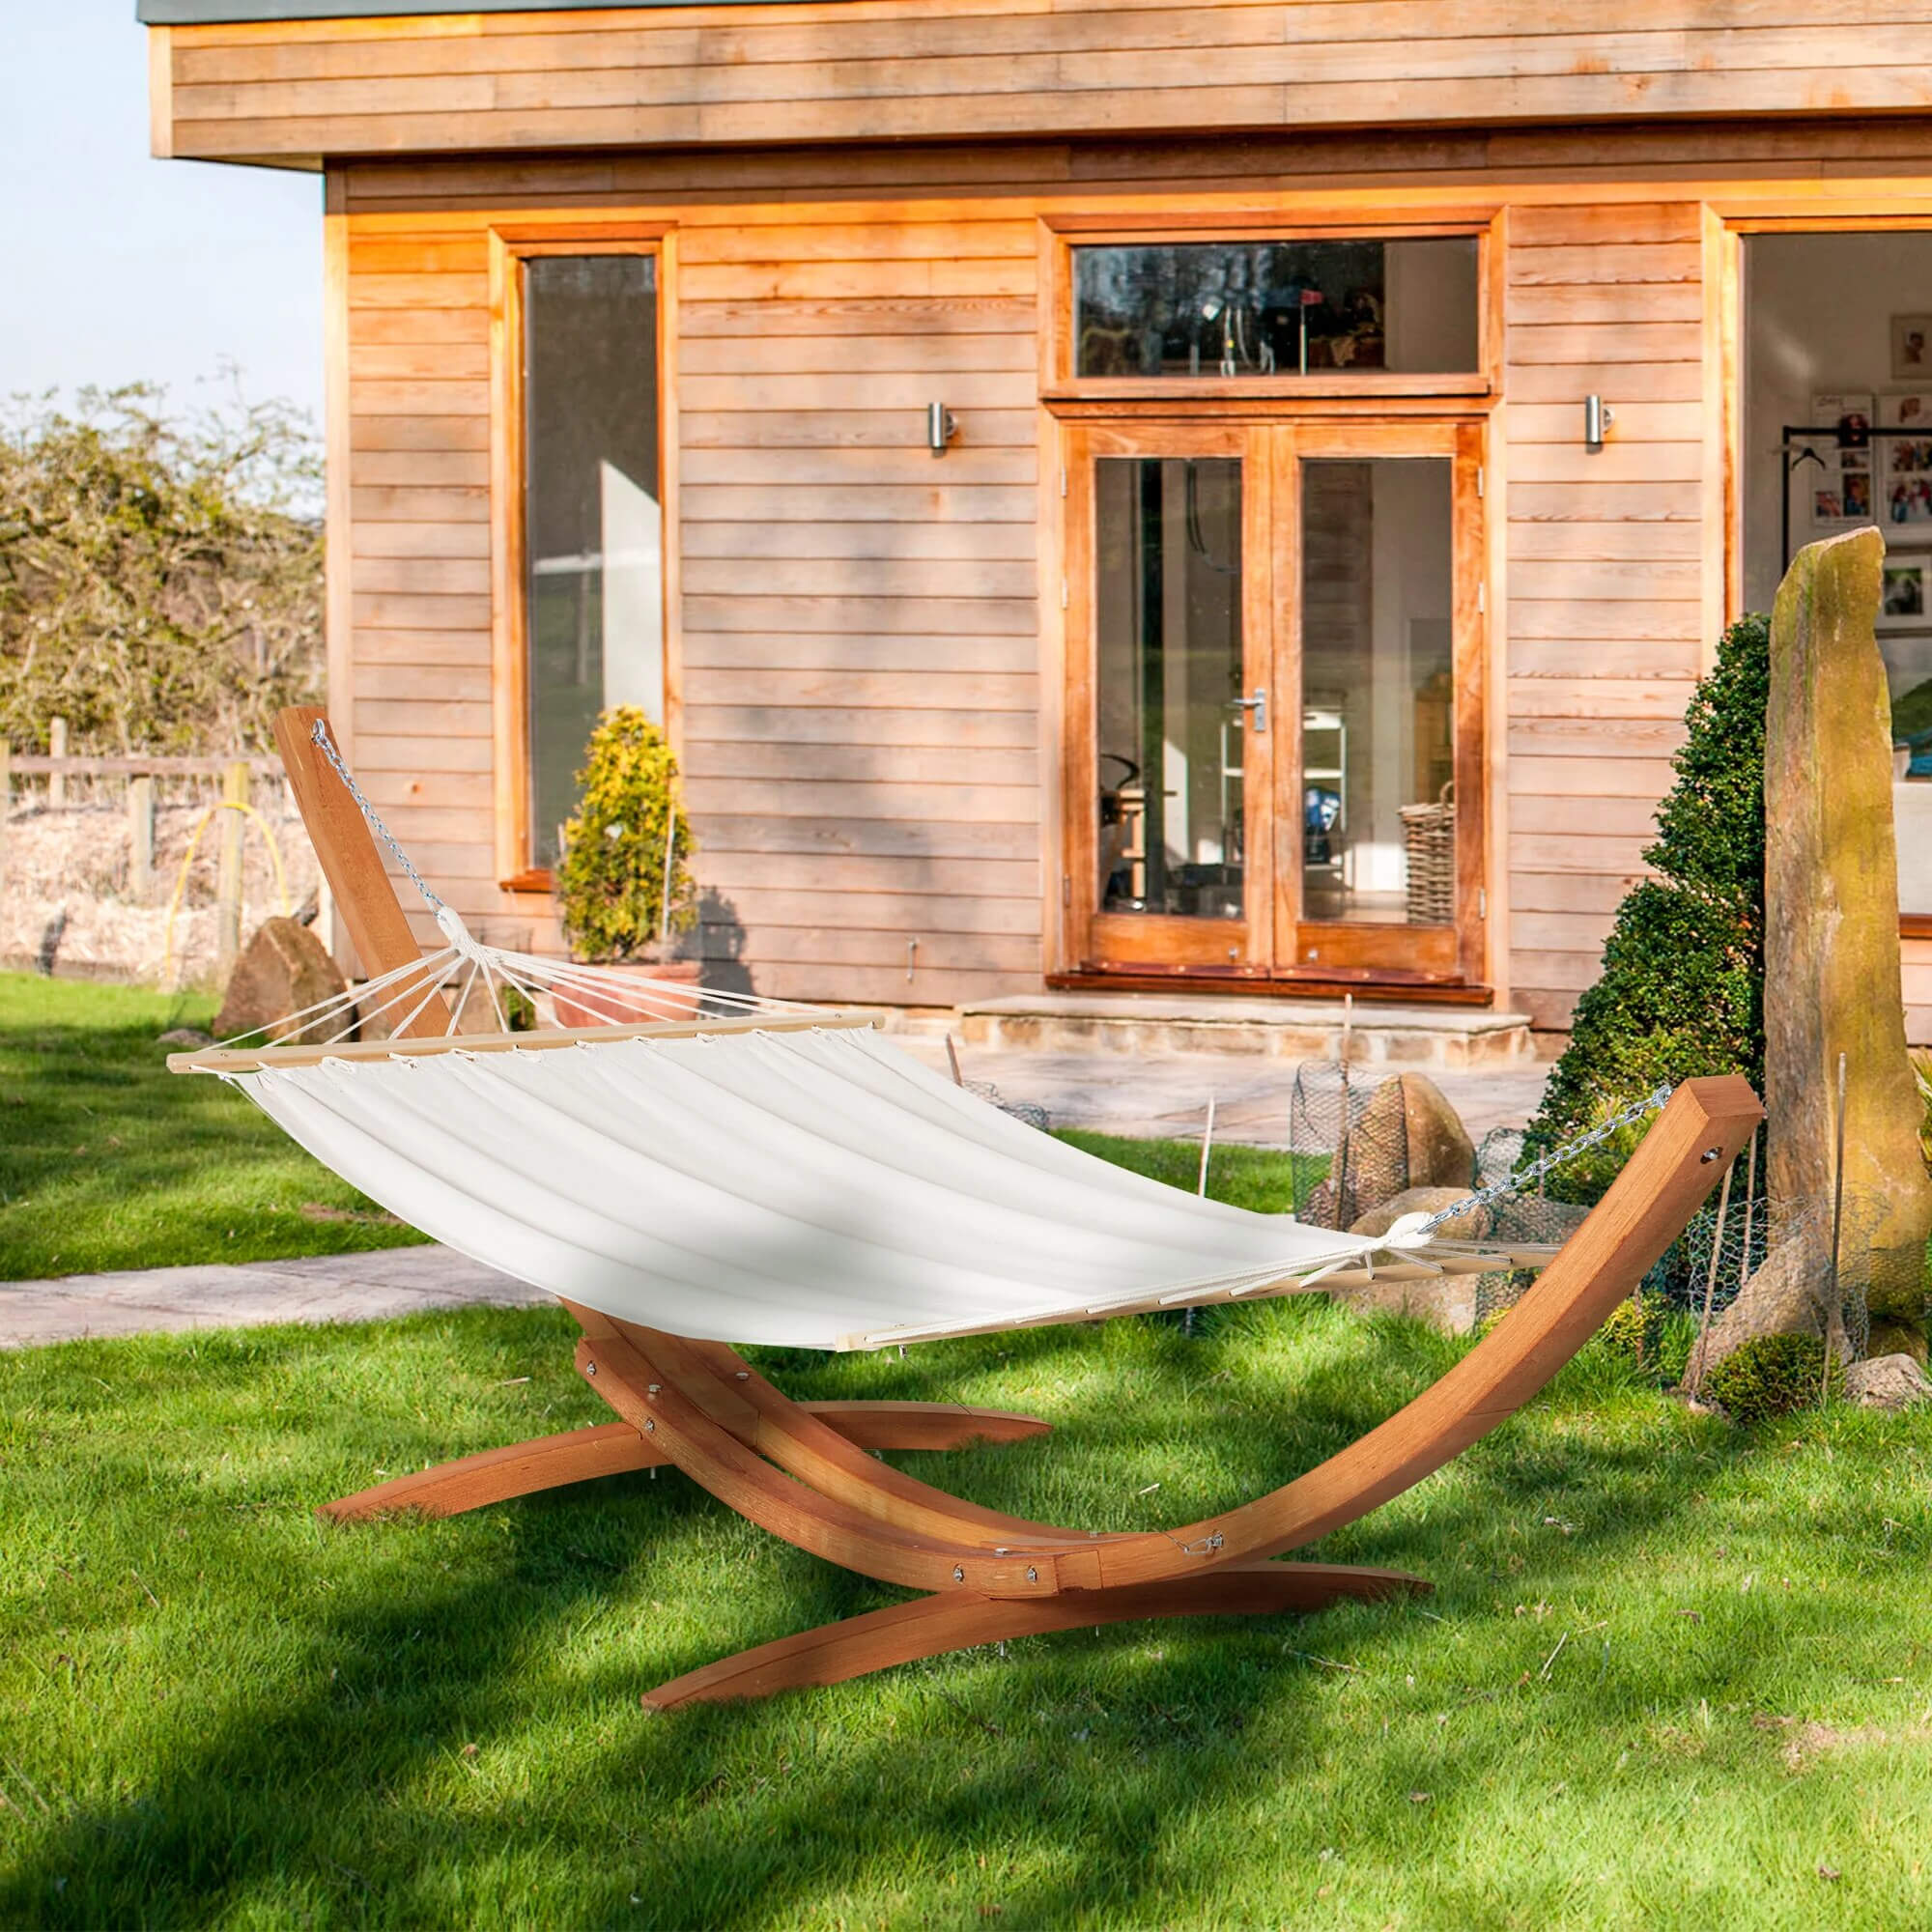 teak-wood-hammock-stand-outdoor-image